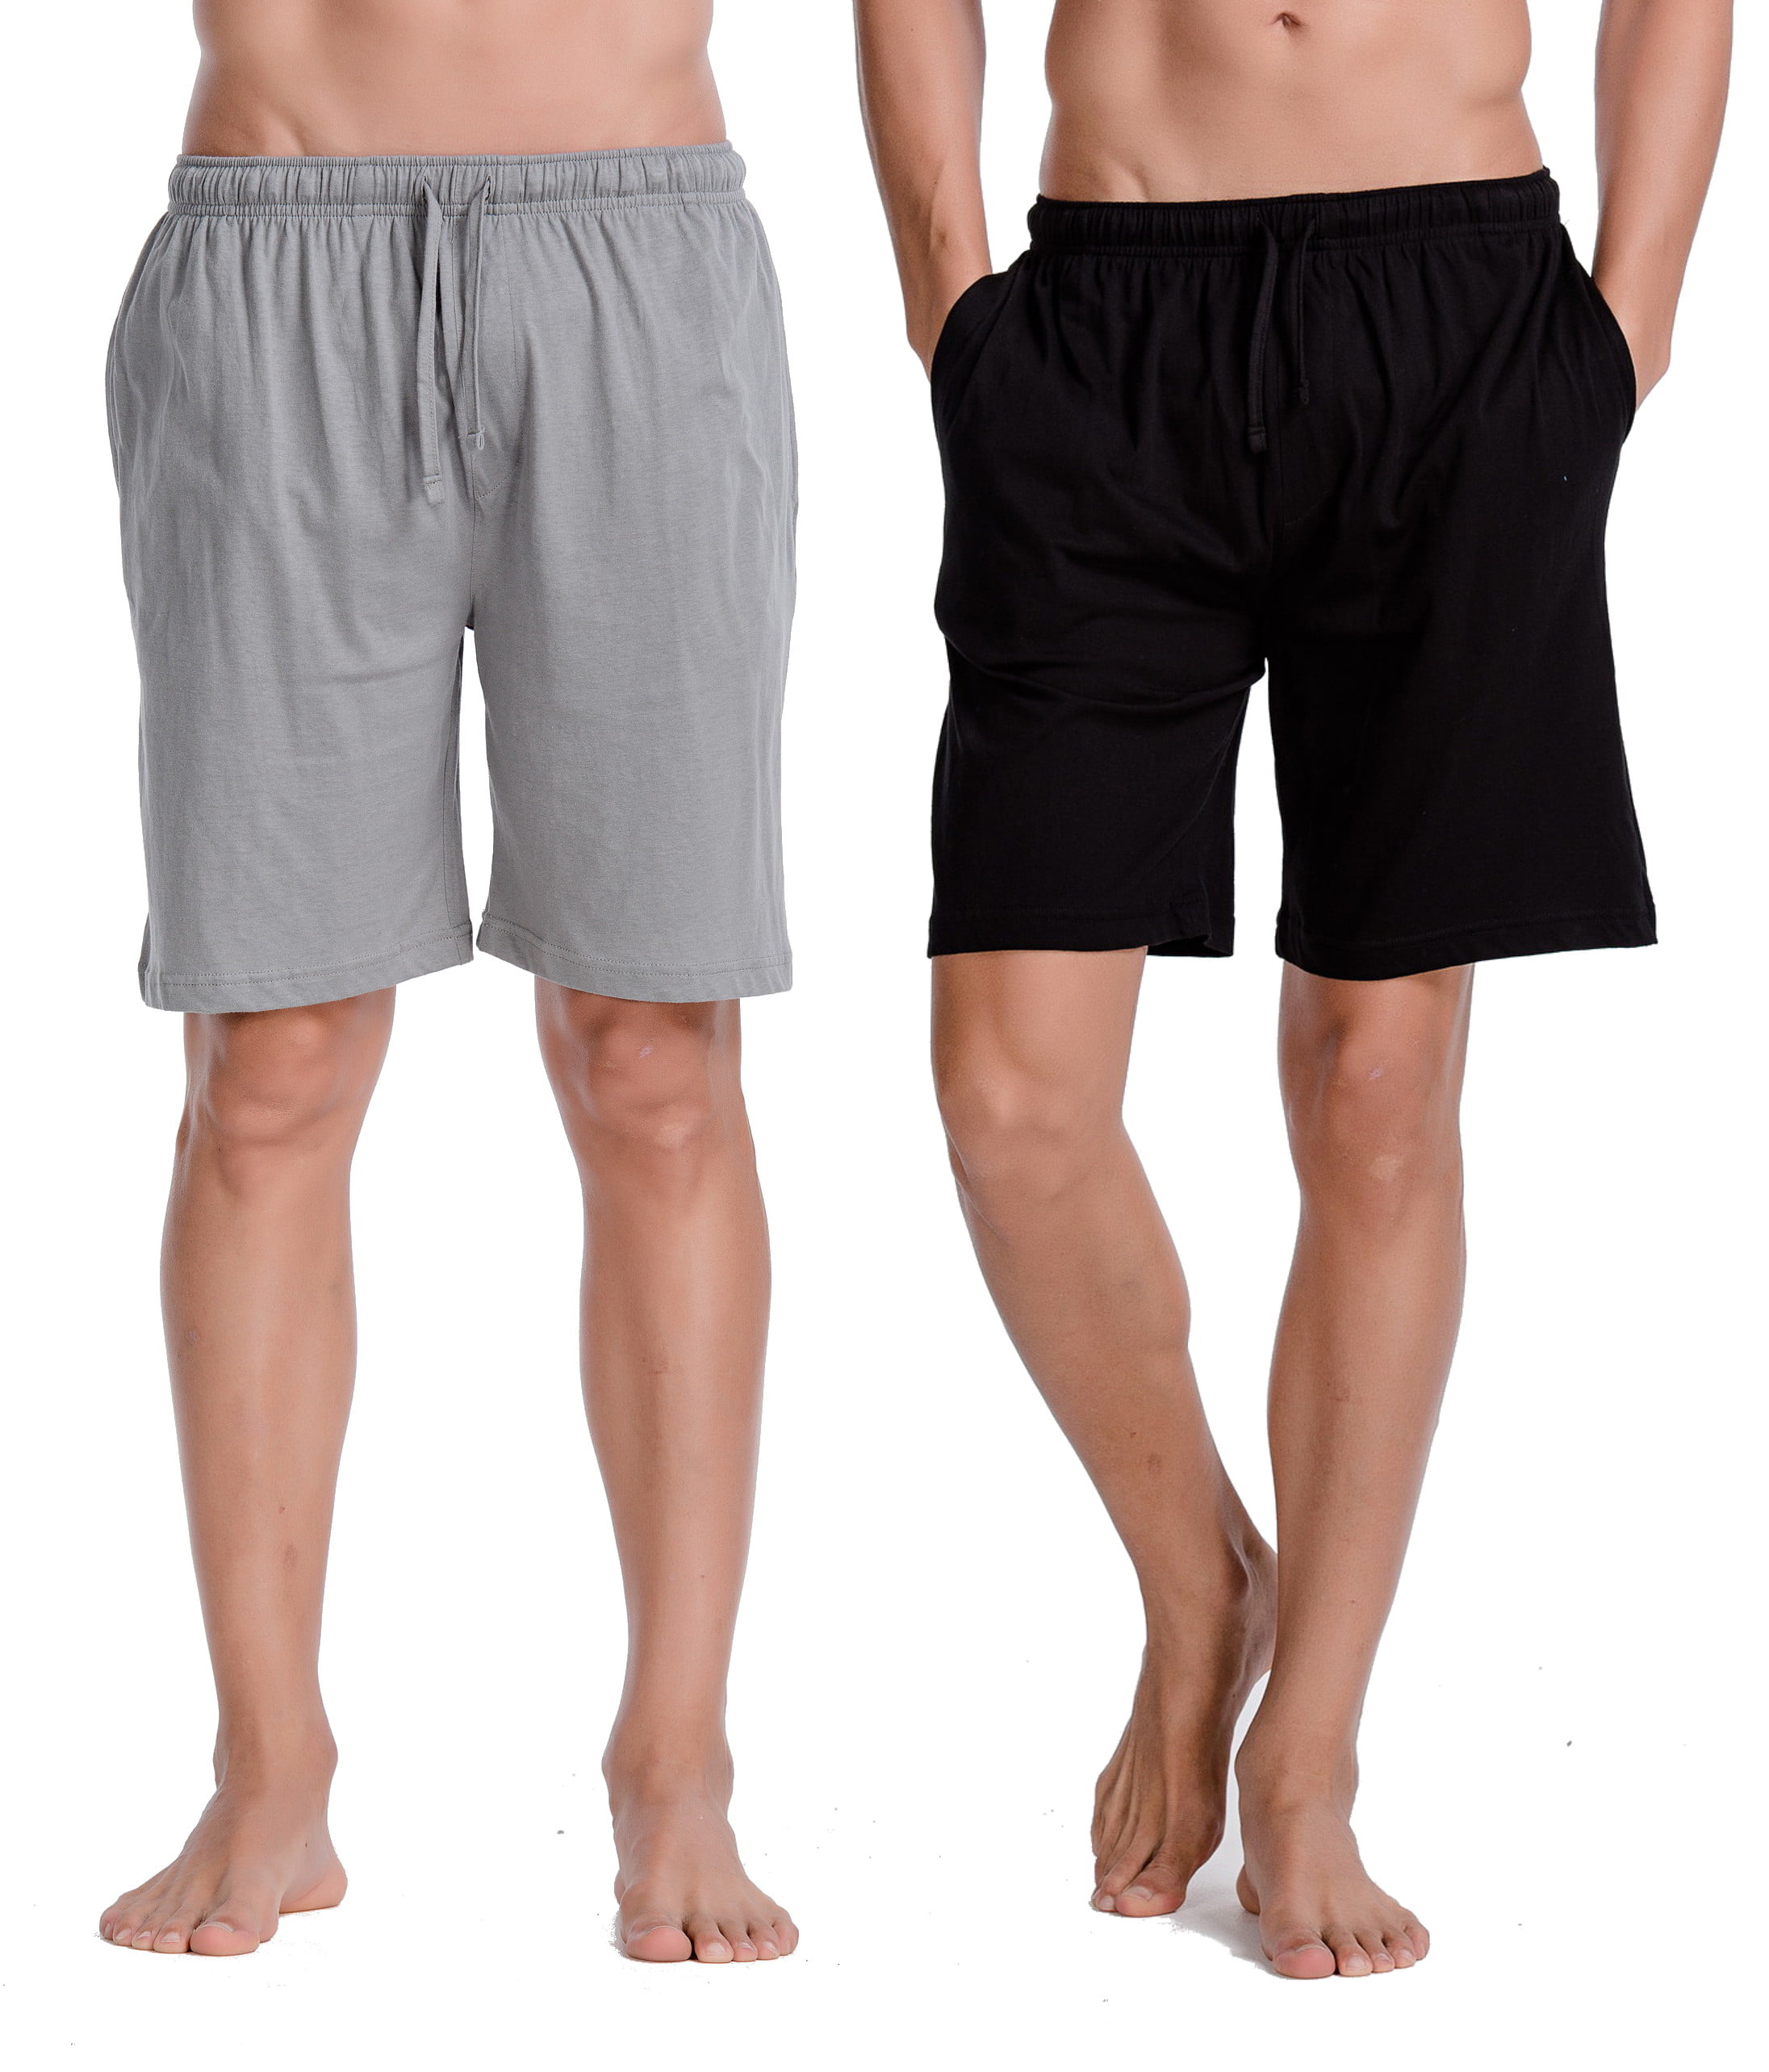 CYZ Men's Comfort Cotton Jersey Shorts with Pockets-BlackGreyMelange2PK ...